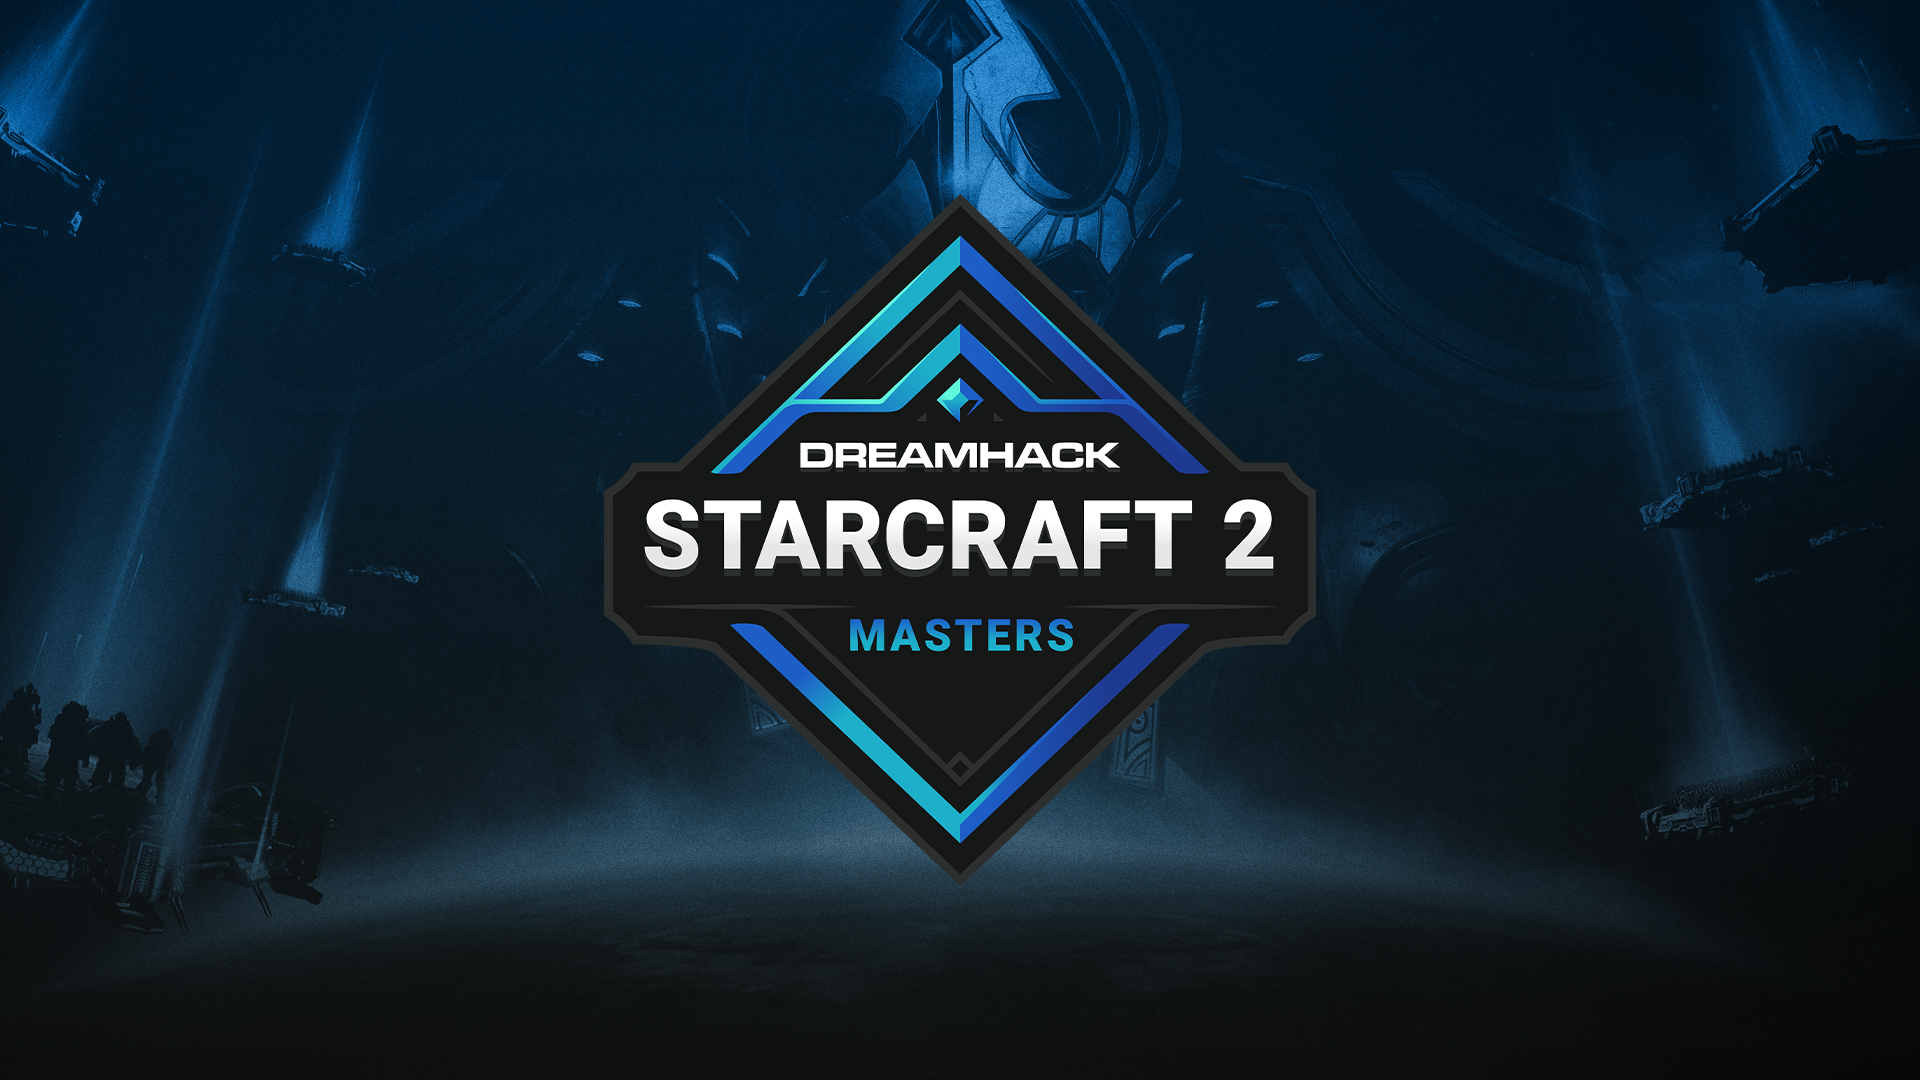 DreamHack StarCraft 2 Masters